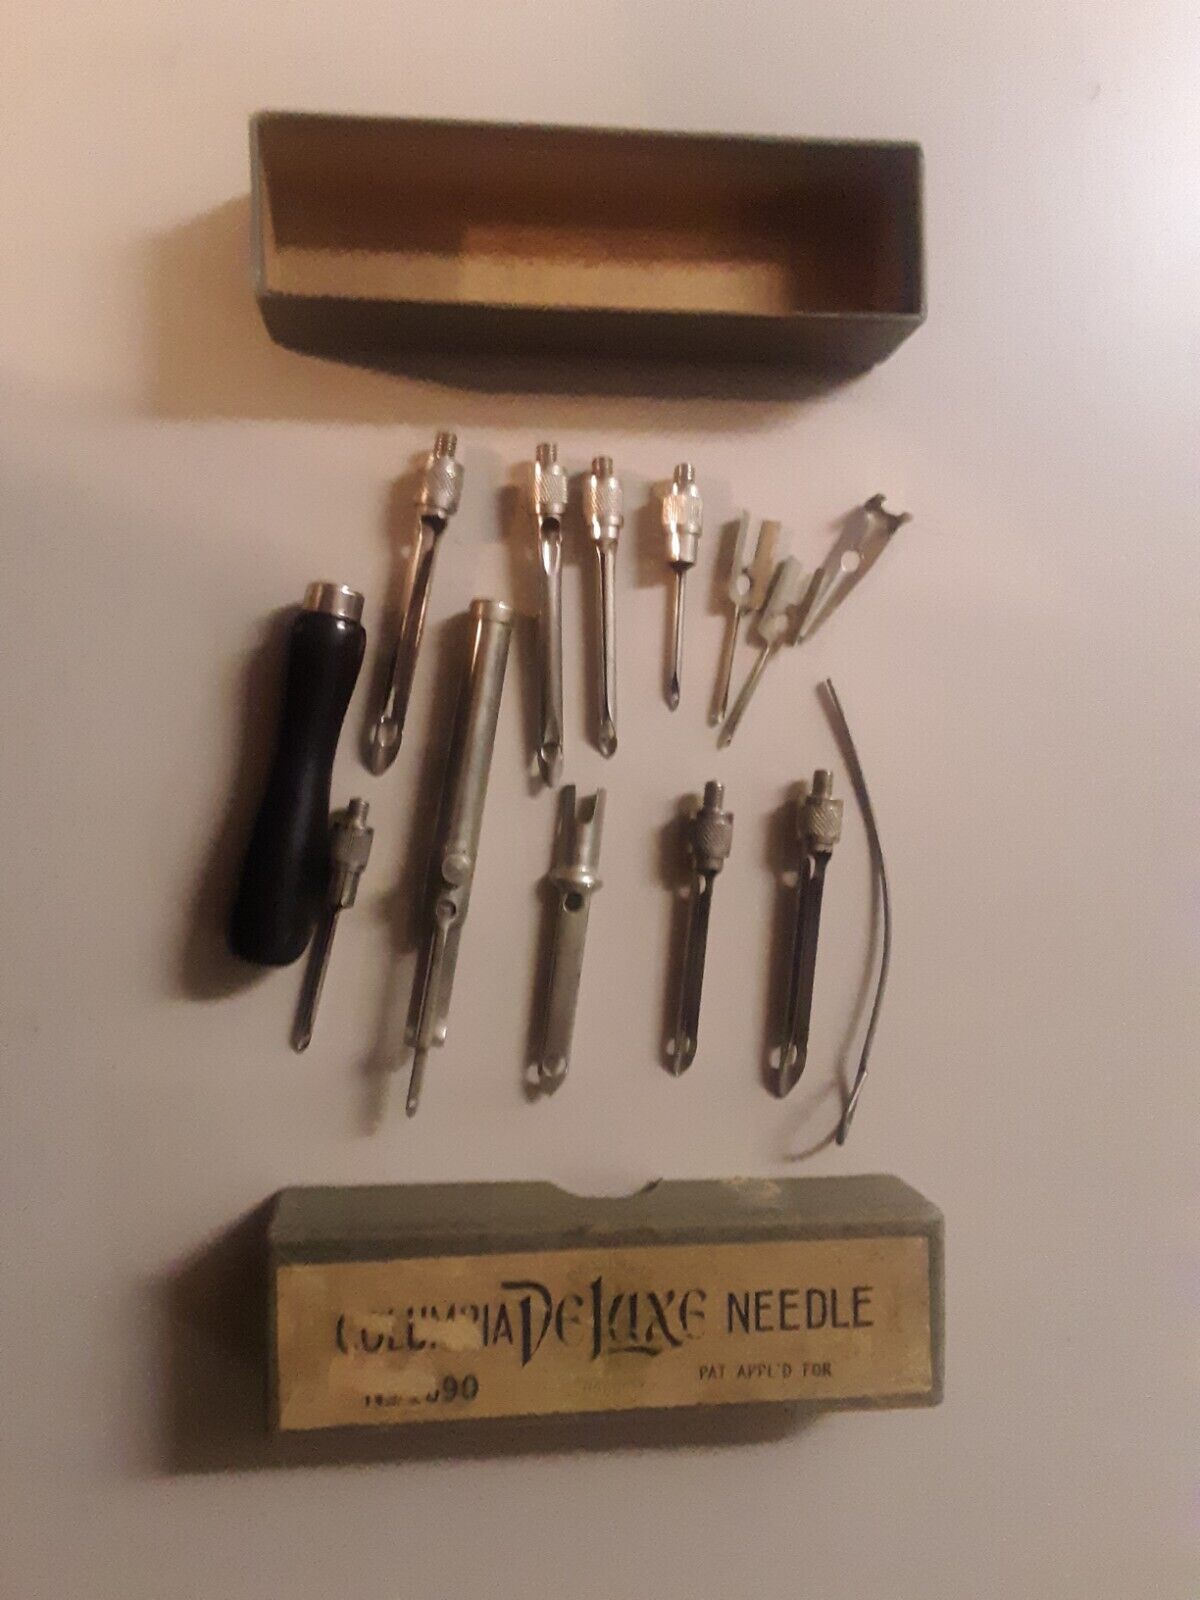 Antoque Columbia Deluxe Needle No. 1690 Rug Needles Lots Of Extra Parts